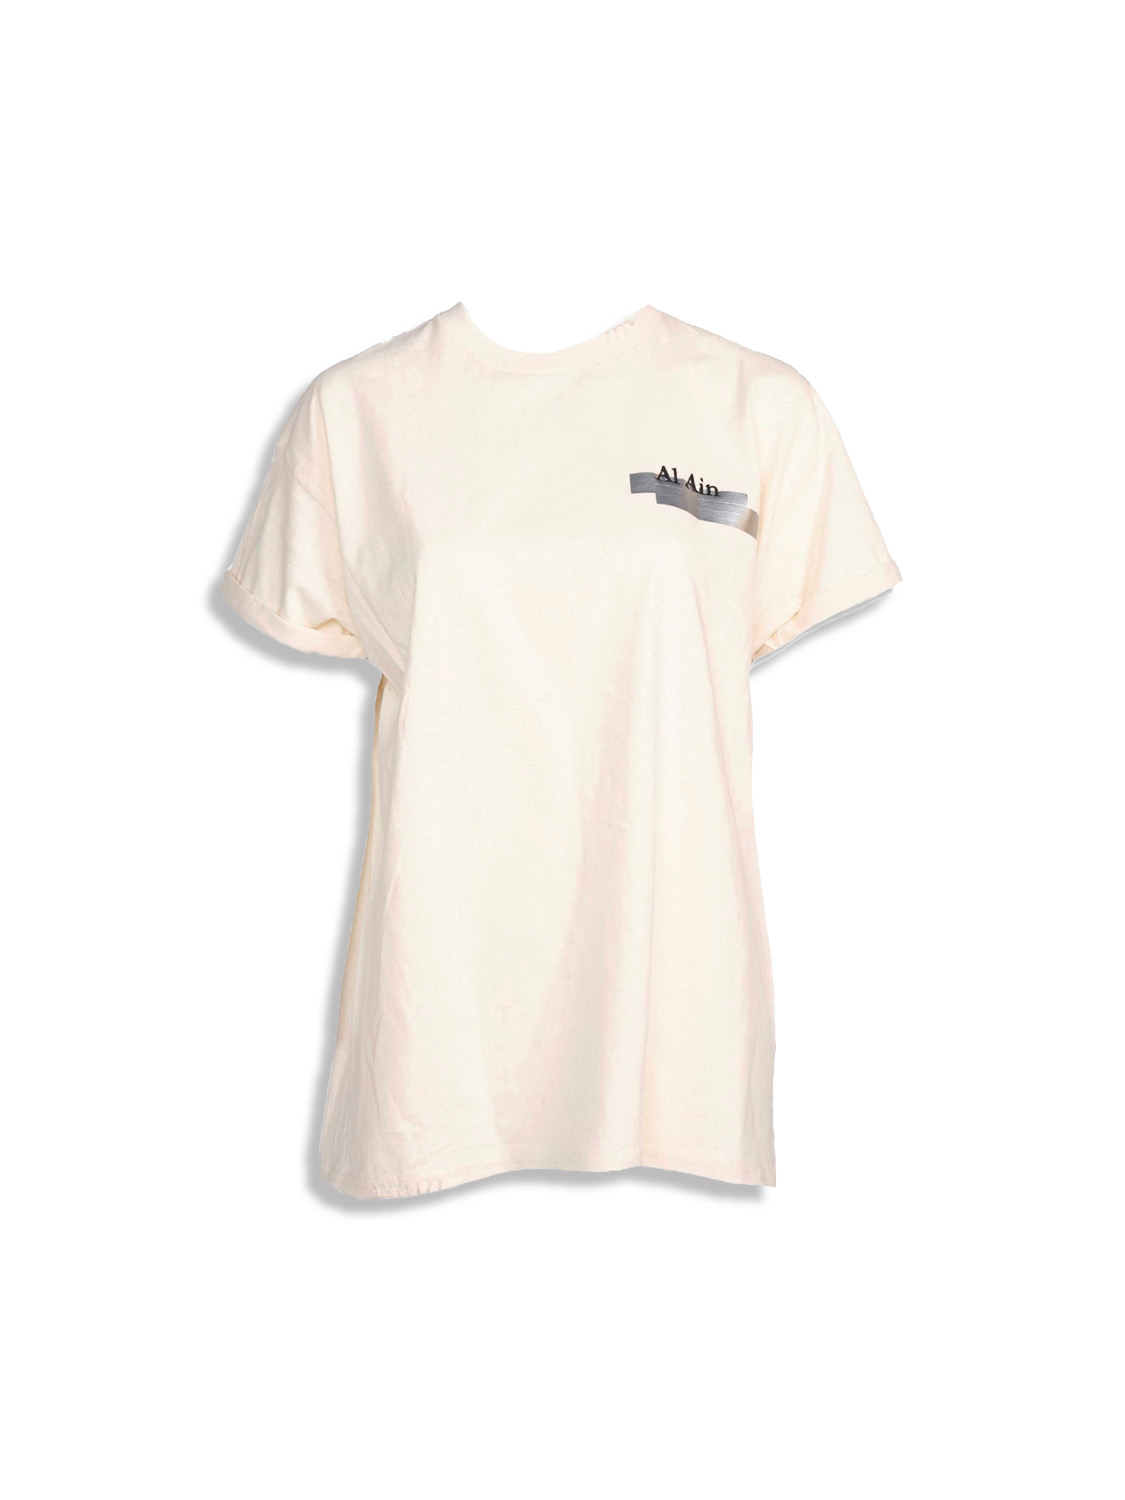 Amhx Cotton Patch Shirt - Cotton Shirt with Printed Patch Design